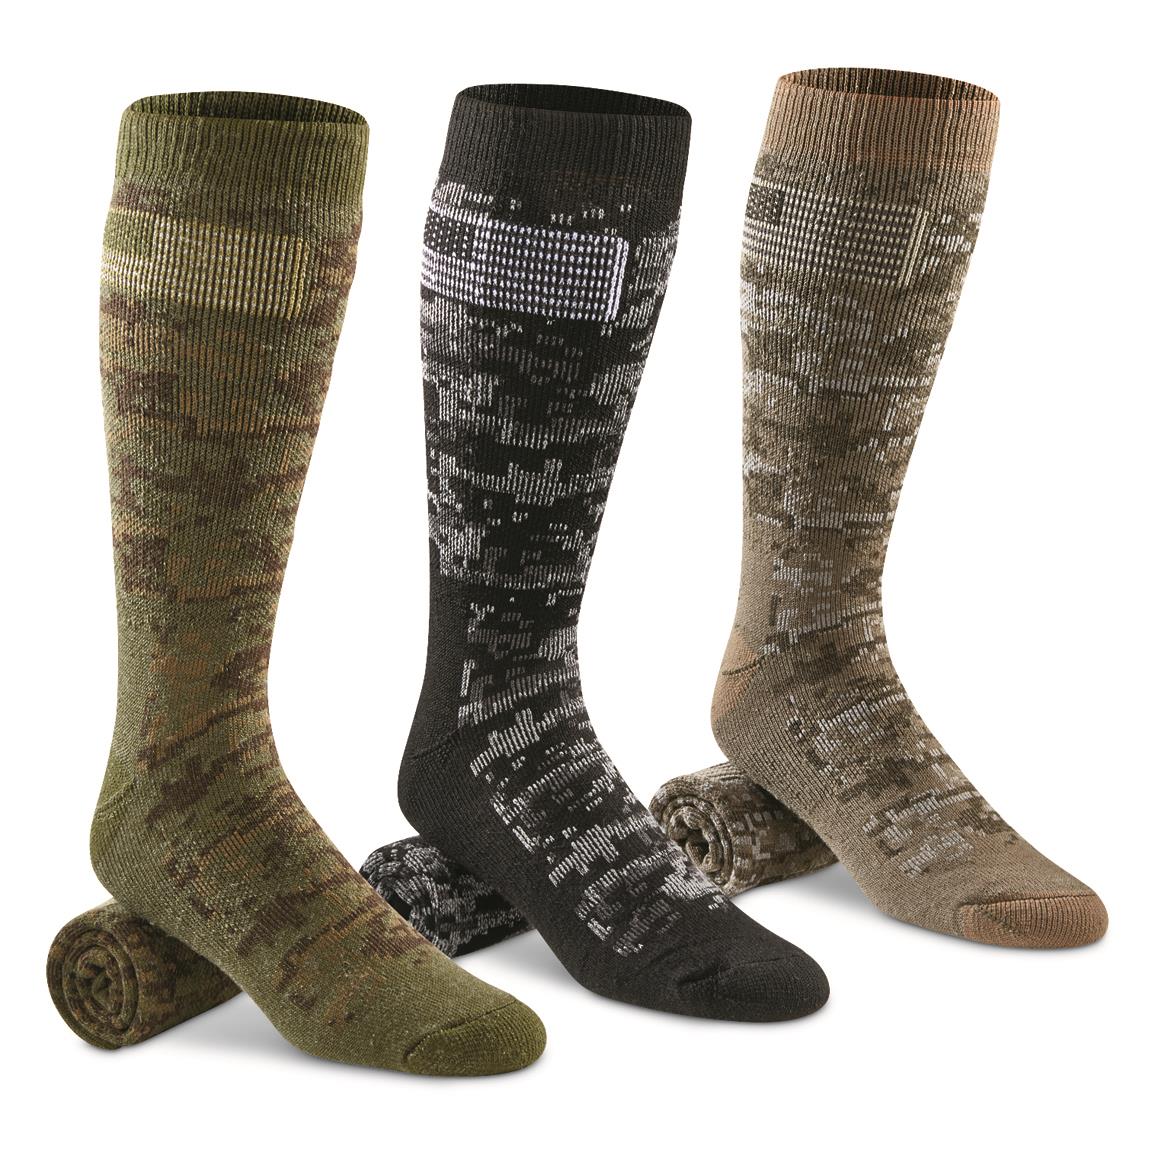 Ameri-digi Camo Merino Wool Blend Boot Socks, 3 Pairs, Green Camo (1JX